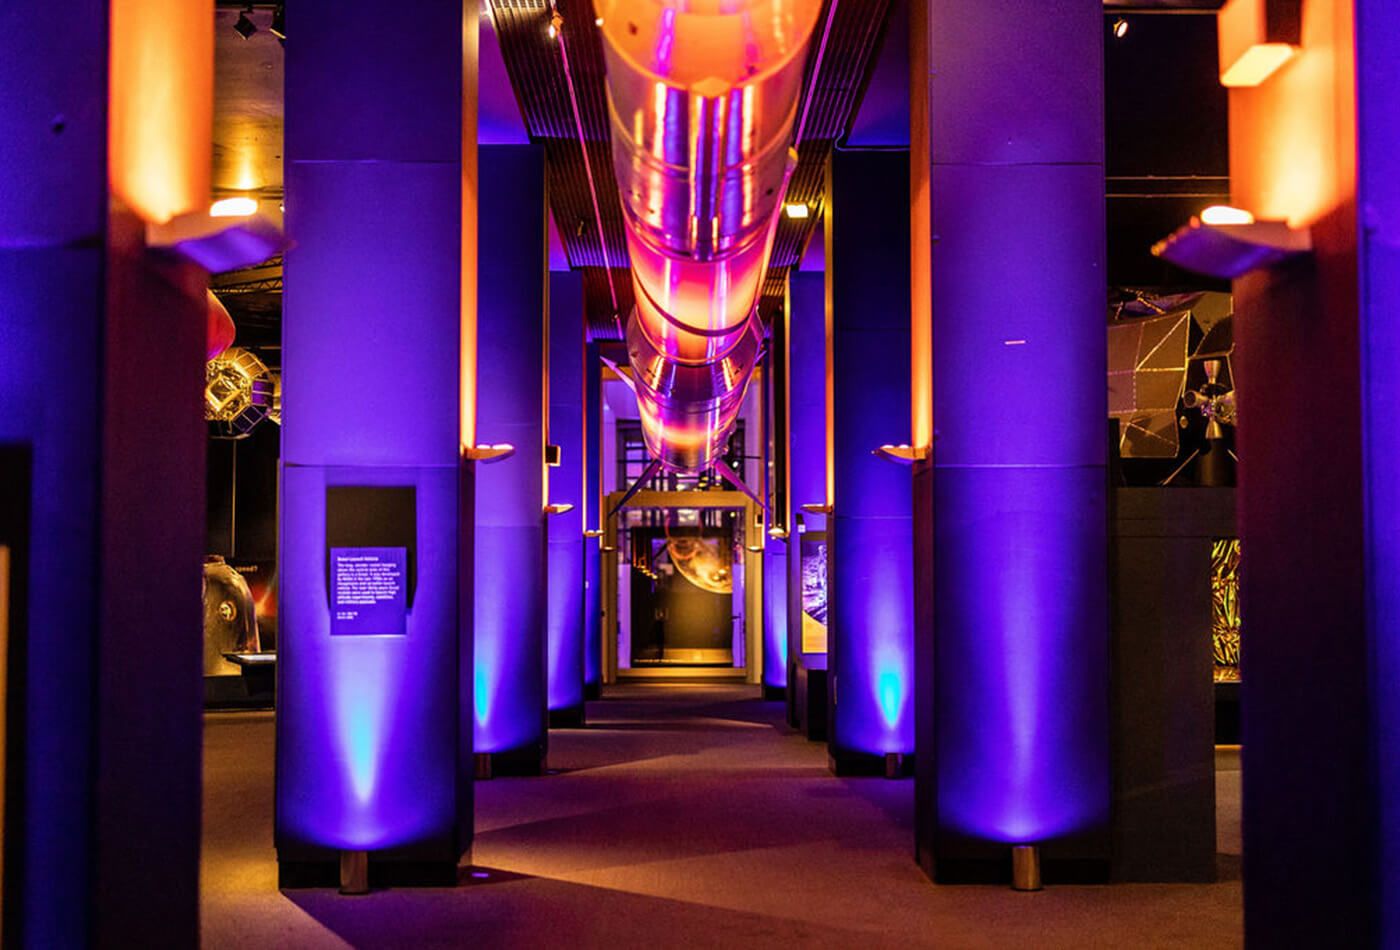 Gallery with purple lighting